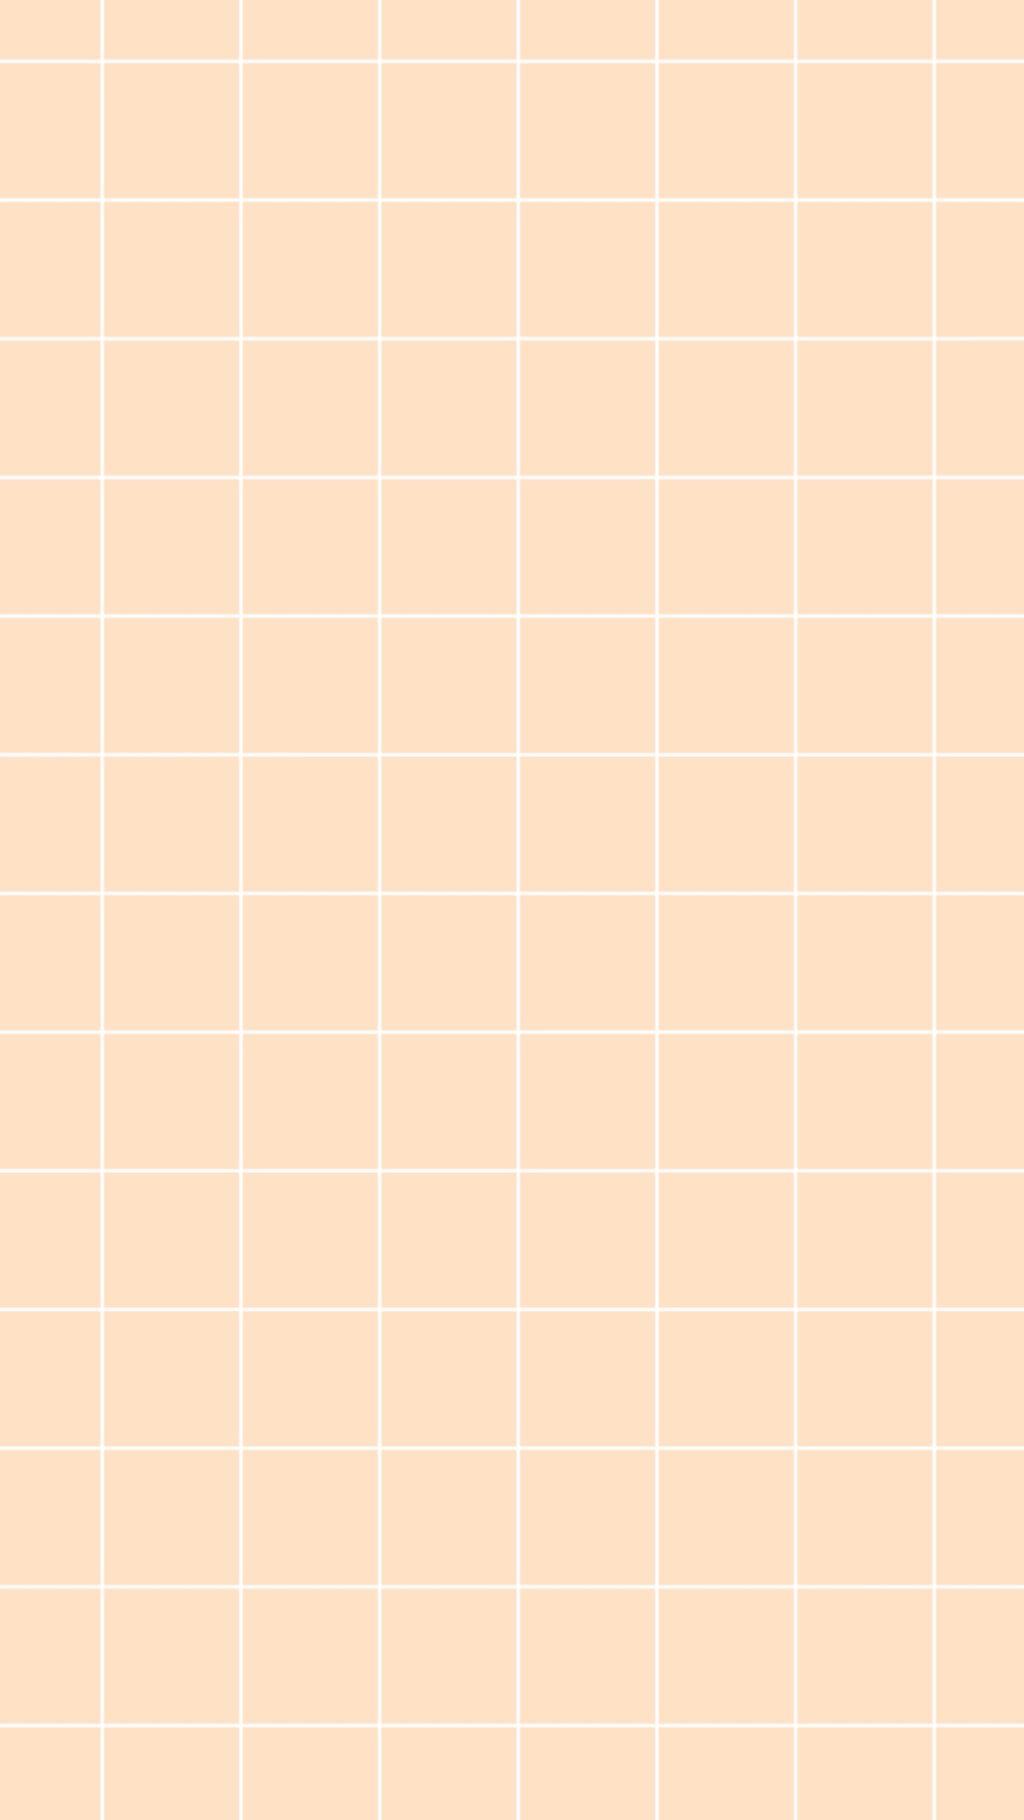 grid aesthetic orangegrid gridwallpaper wallpaper orang